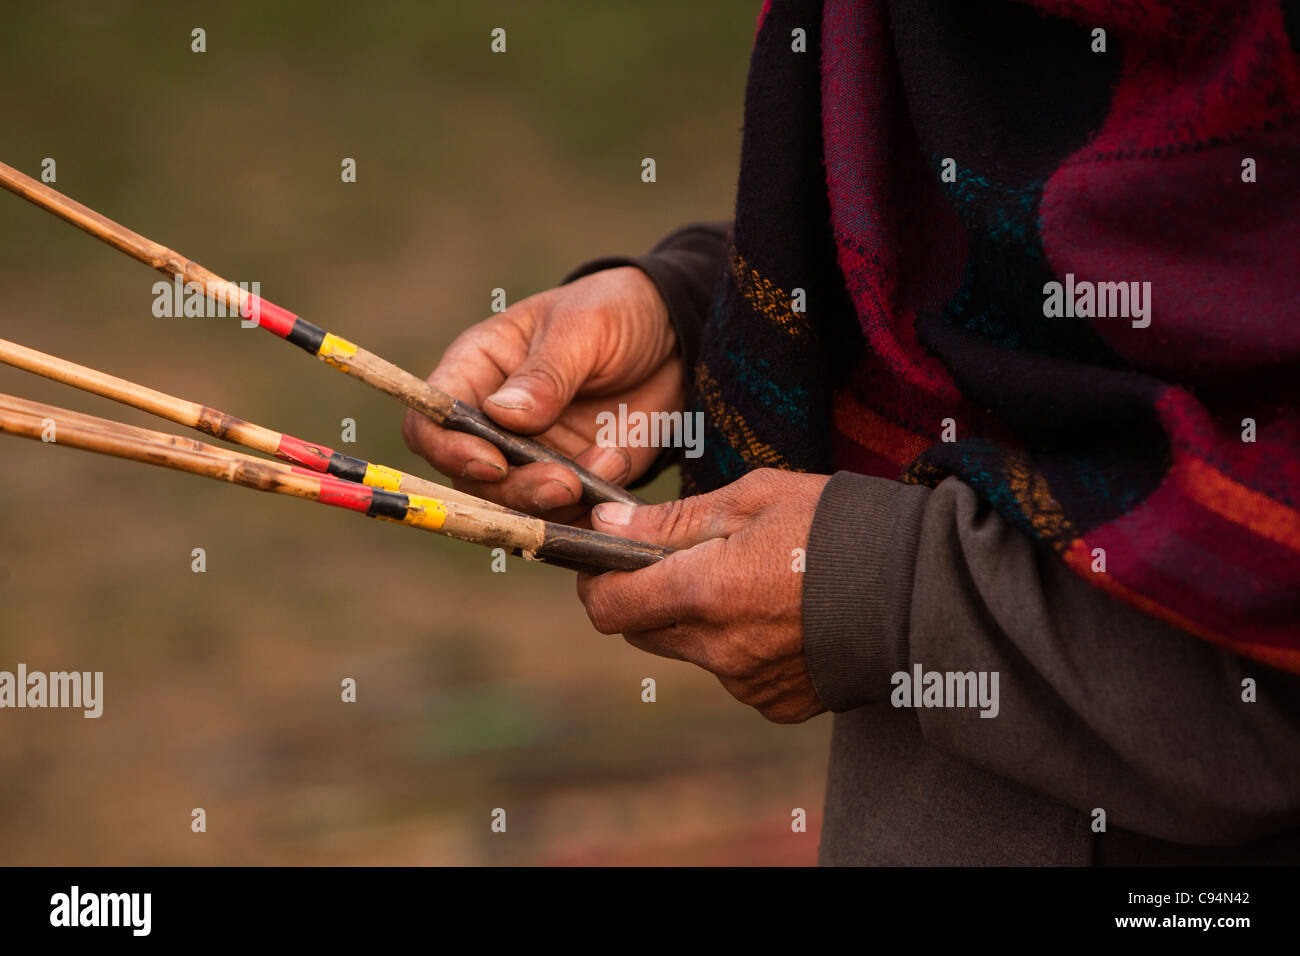 L'Inde, Meghalaya, Shillong, Bola jeu de jeu de tir à l'arc, main tenant des flèches Banque D'Images